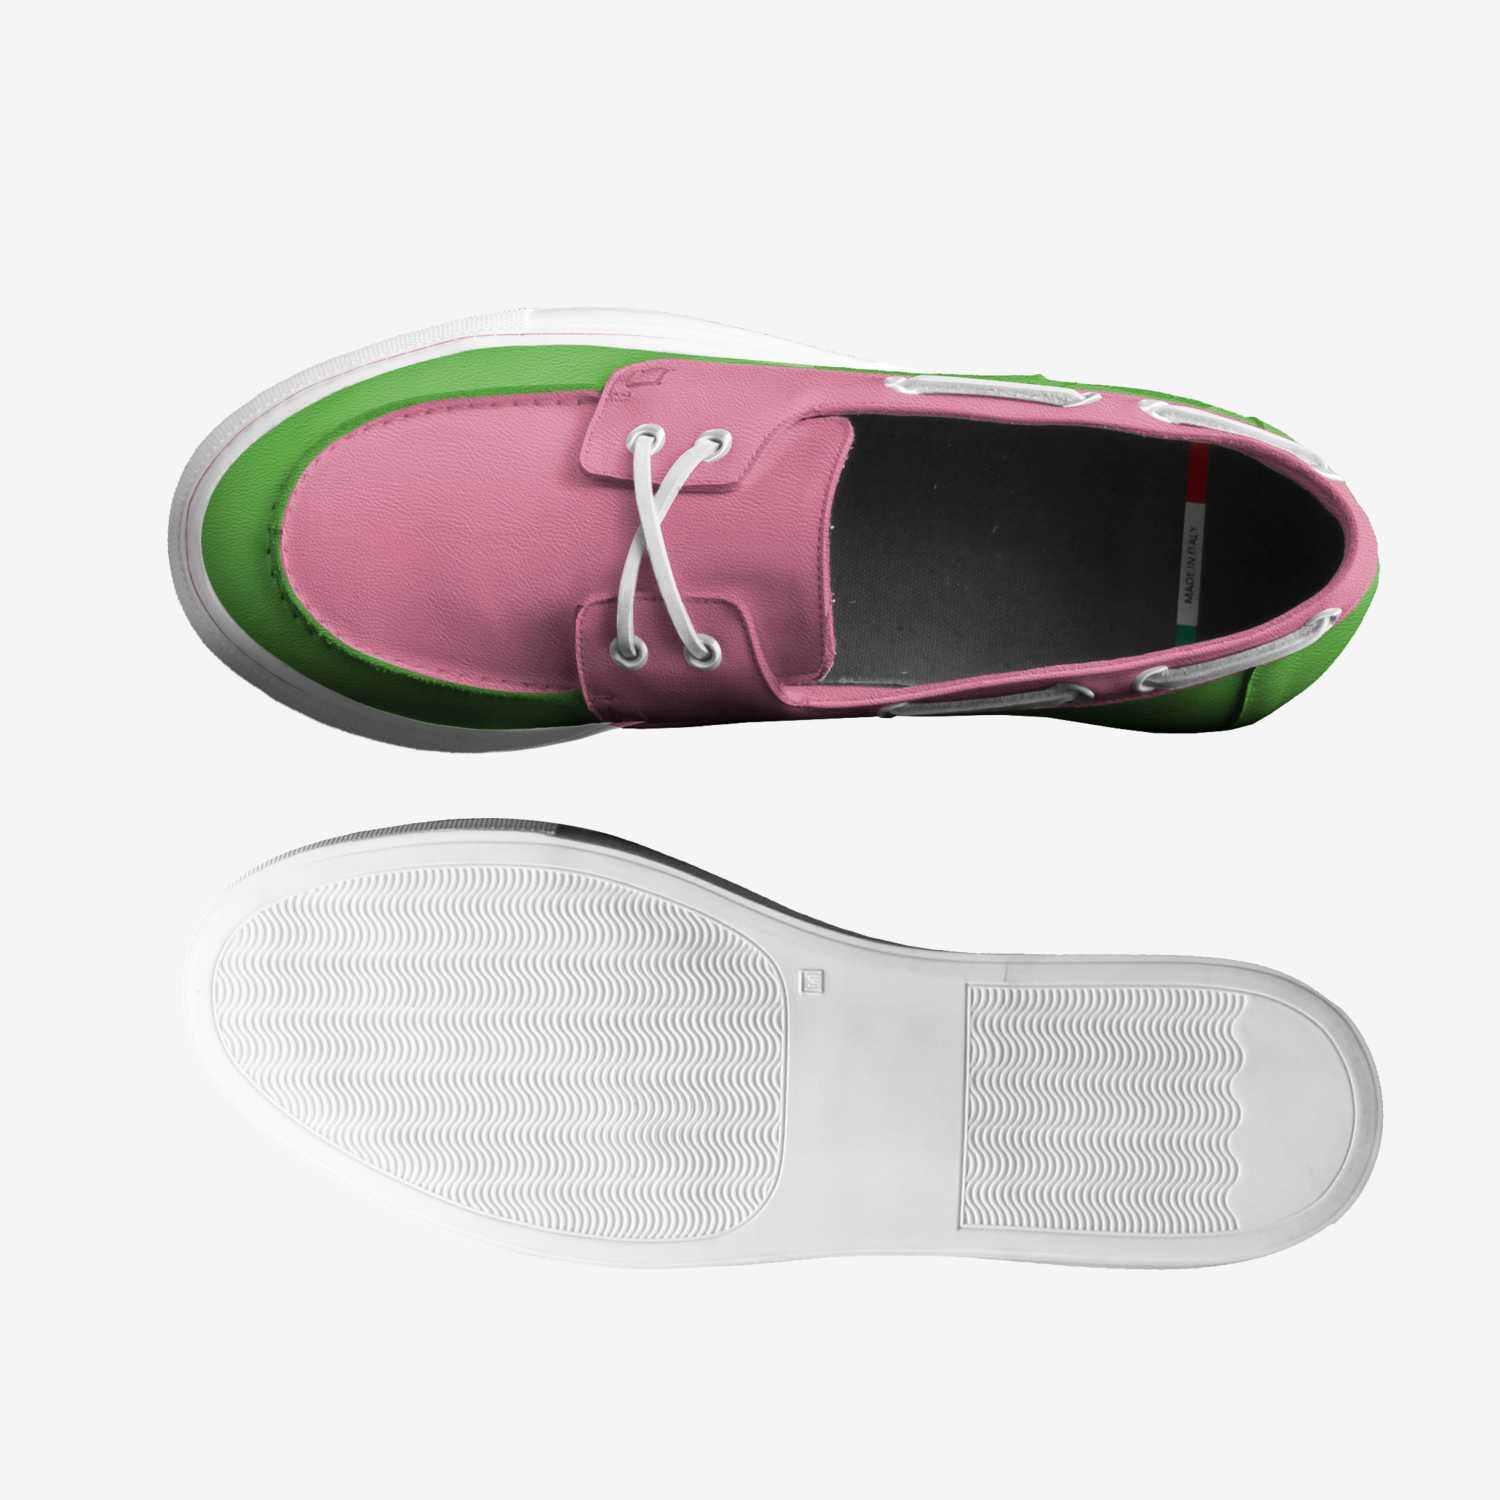 Kris | A Custom Shoe concept by Aaron Sharp